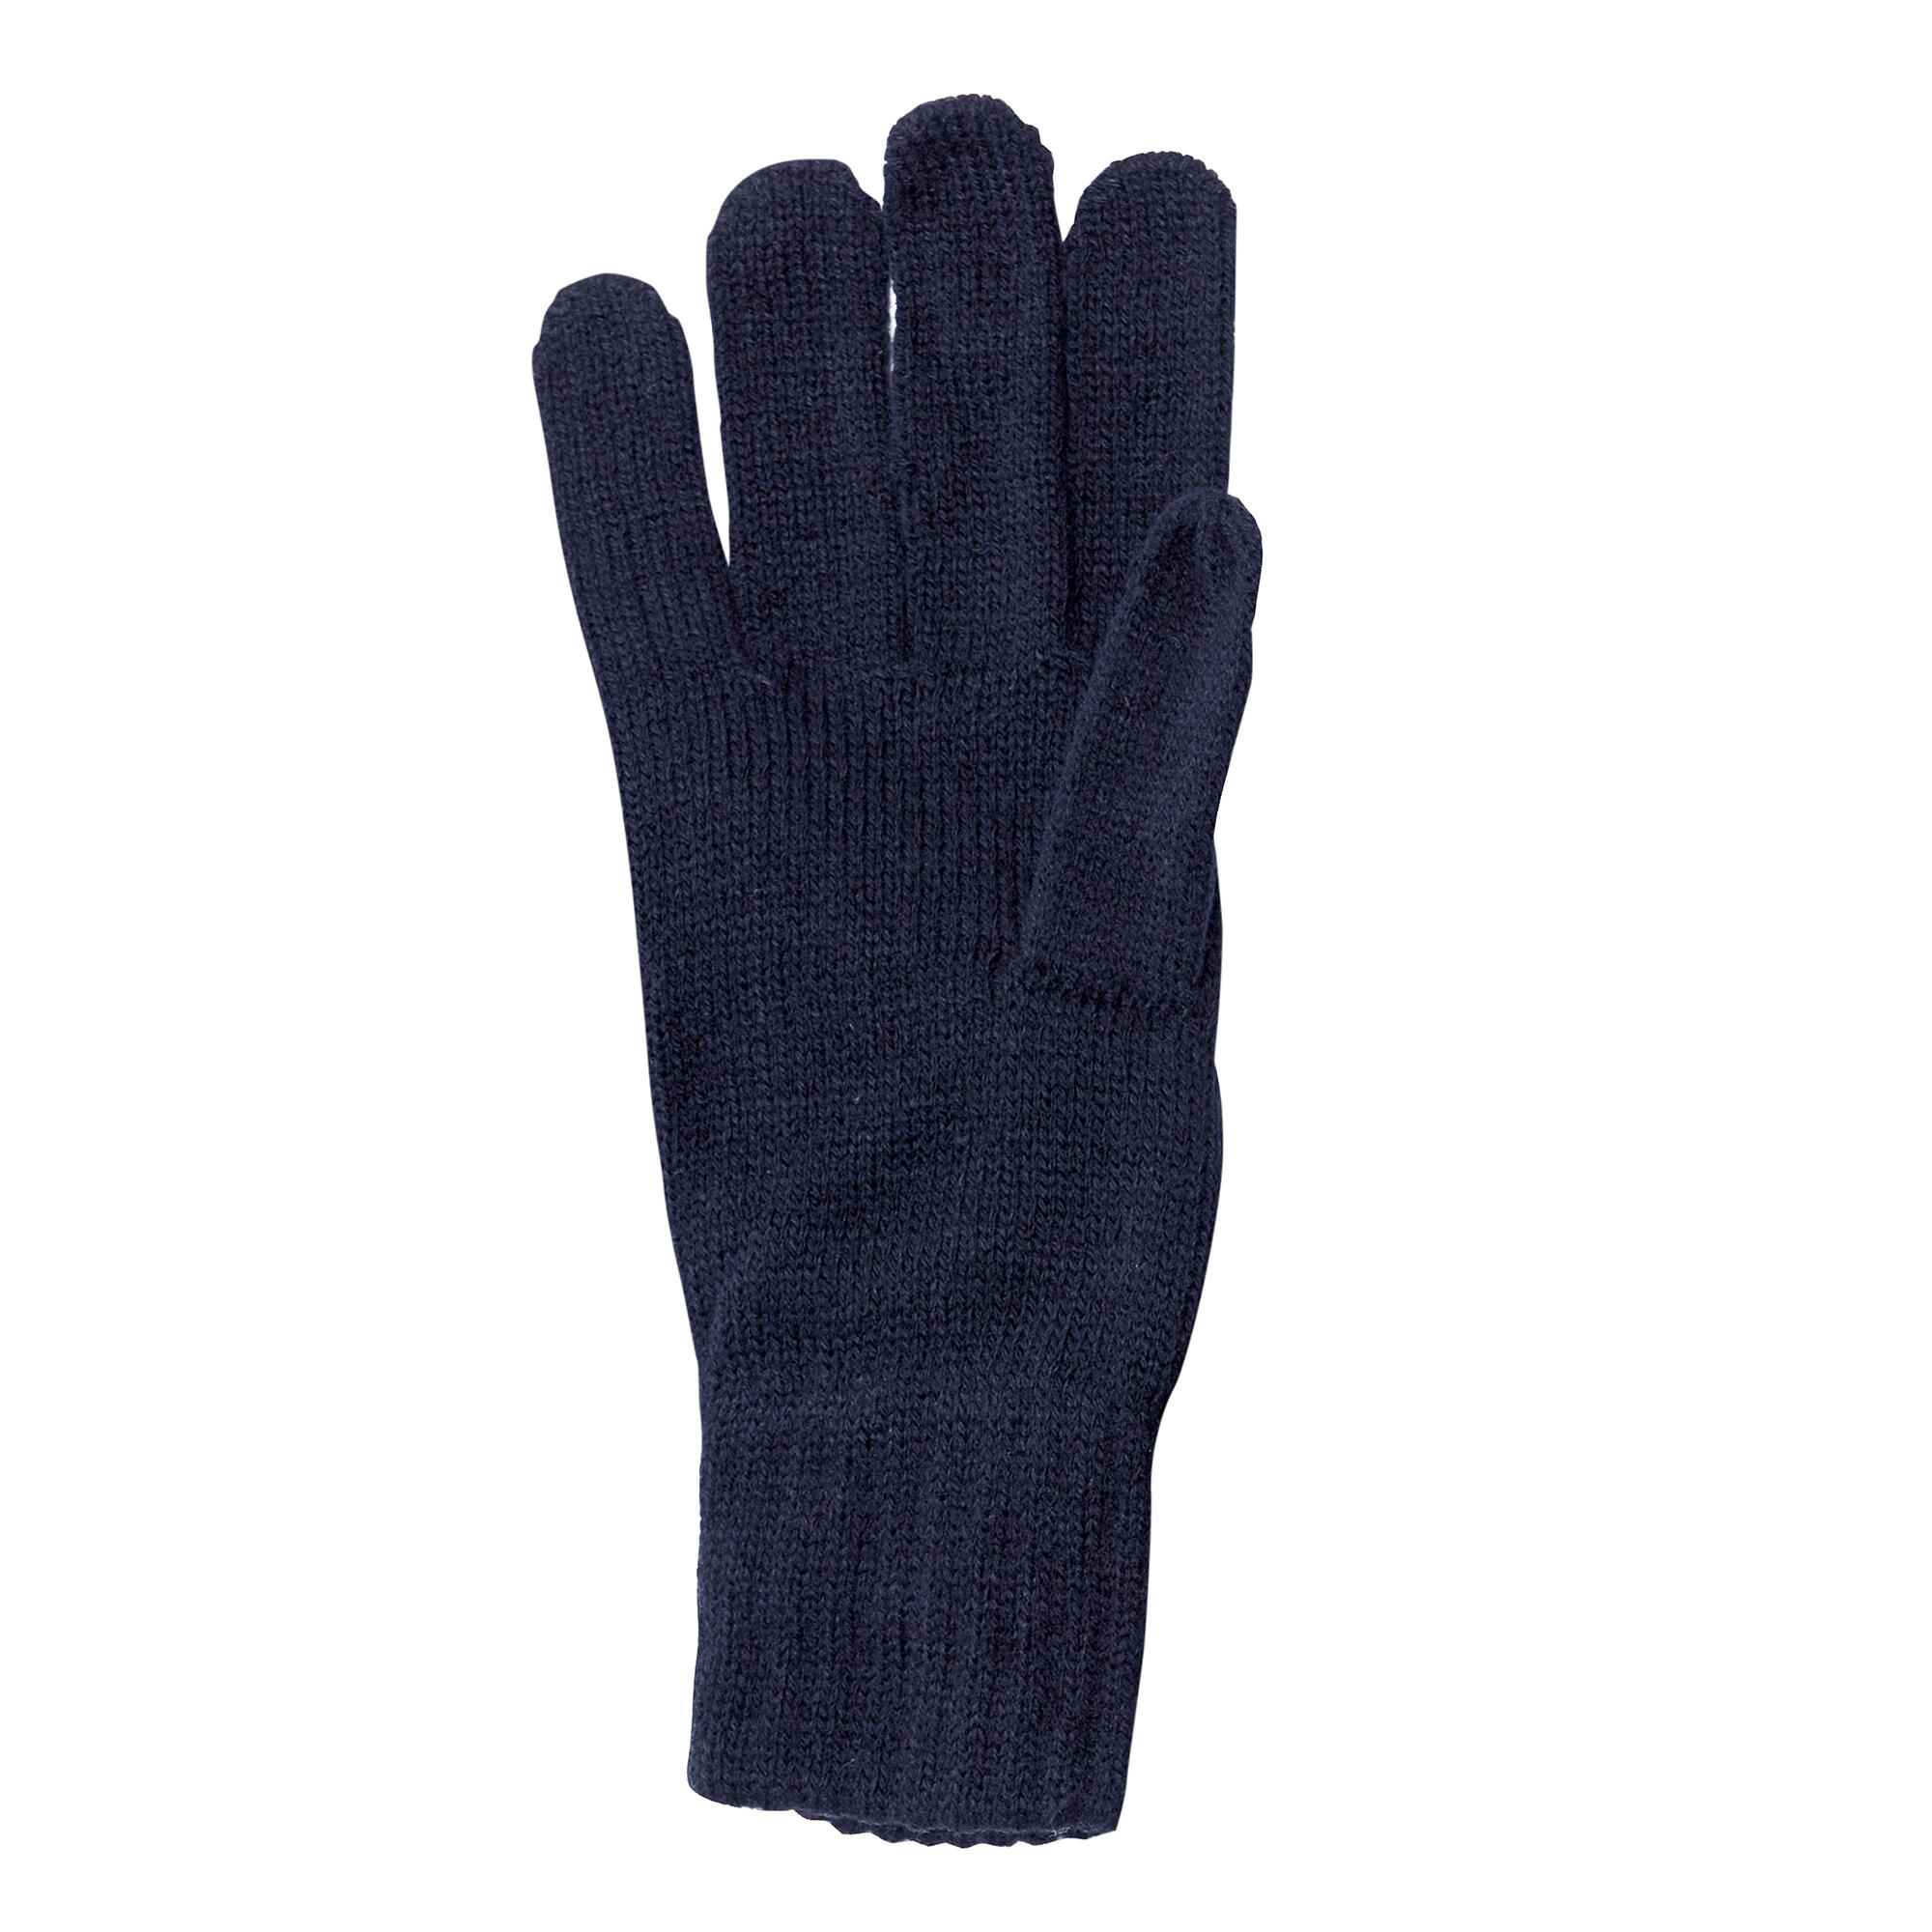 Unisex Knitted Winter Gloves (Navy) 1/3